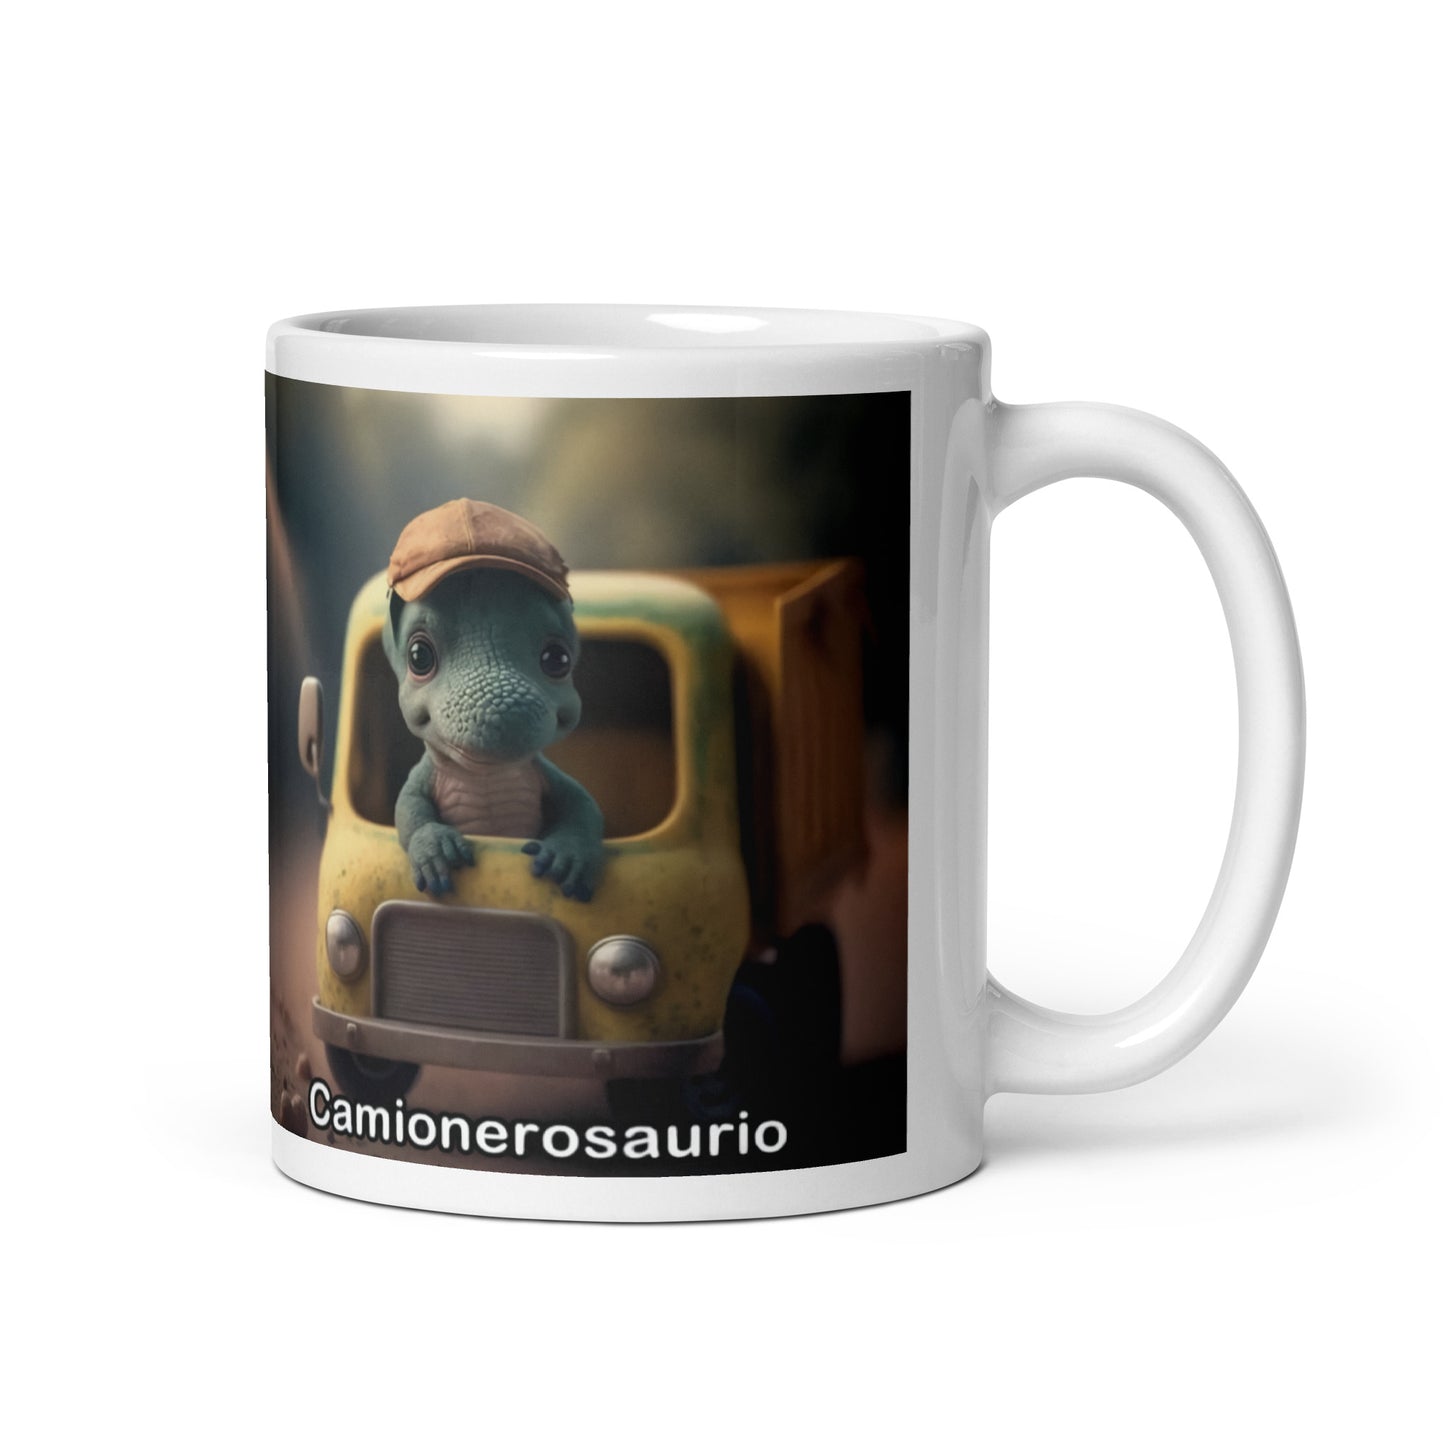 Dino Professions Truckersaurus Mug